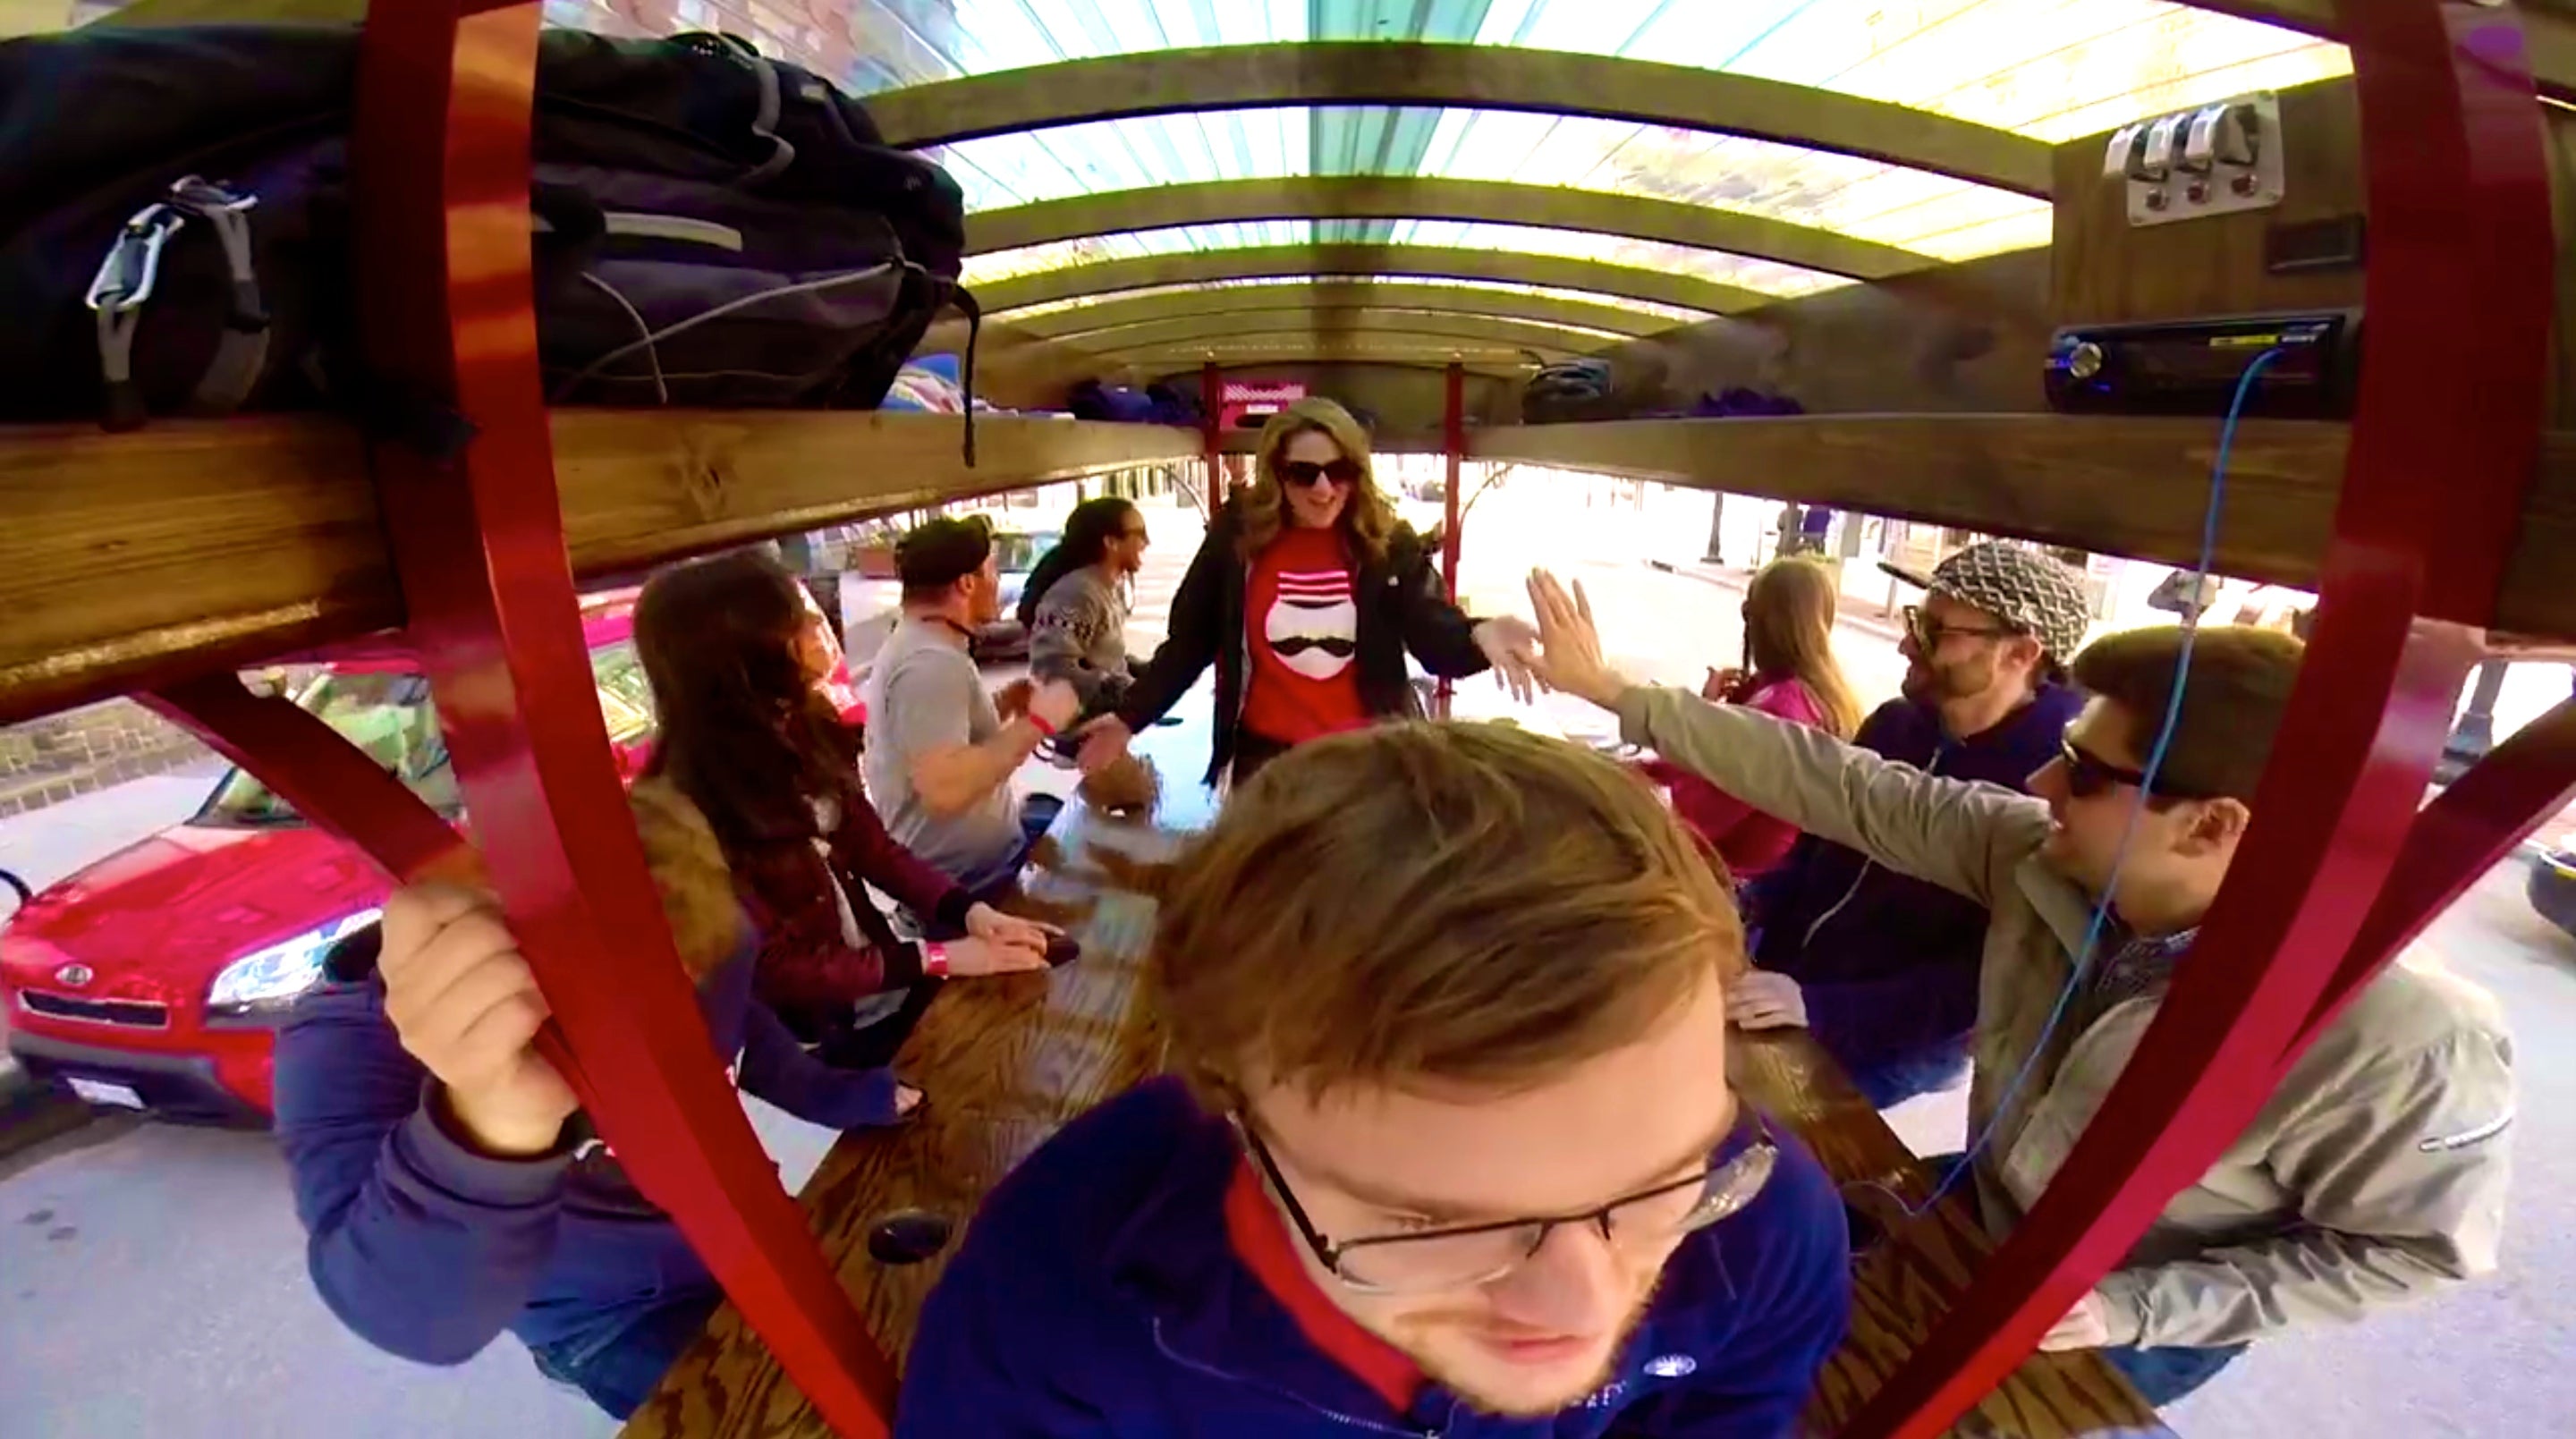 Pedal Wagon Cincinnati featured in the TernPro Video of the Week